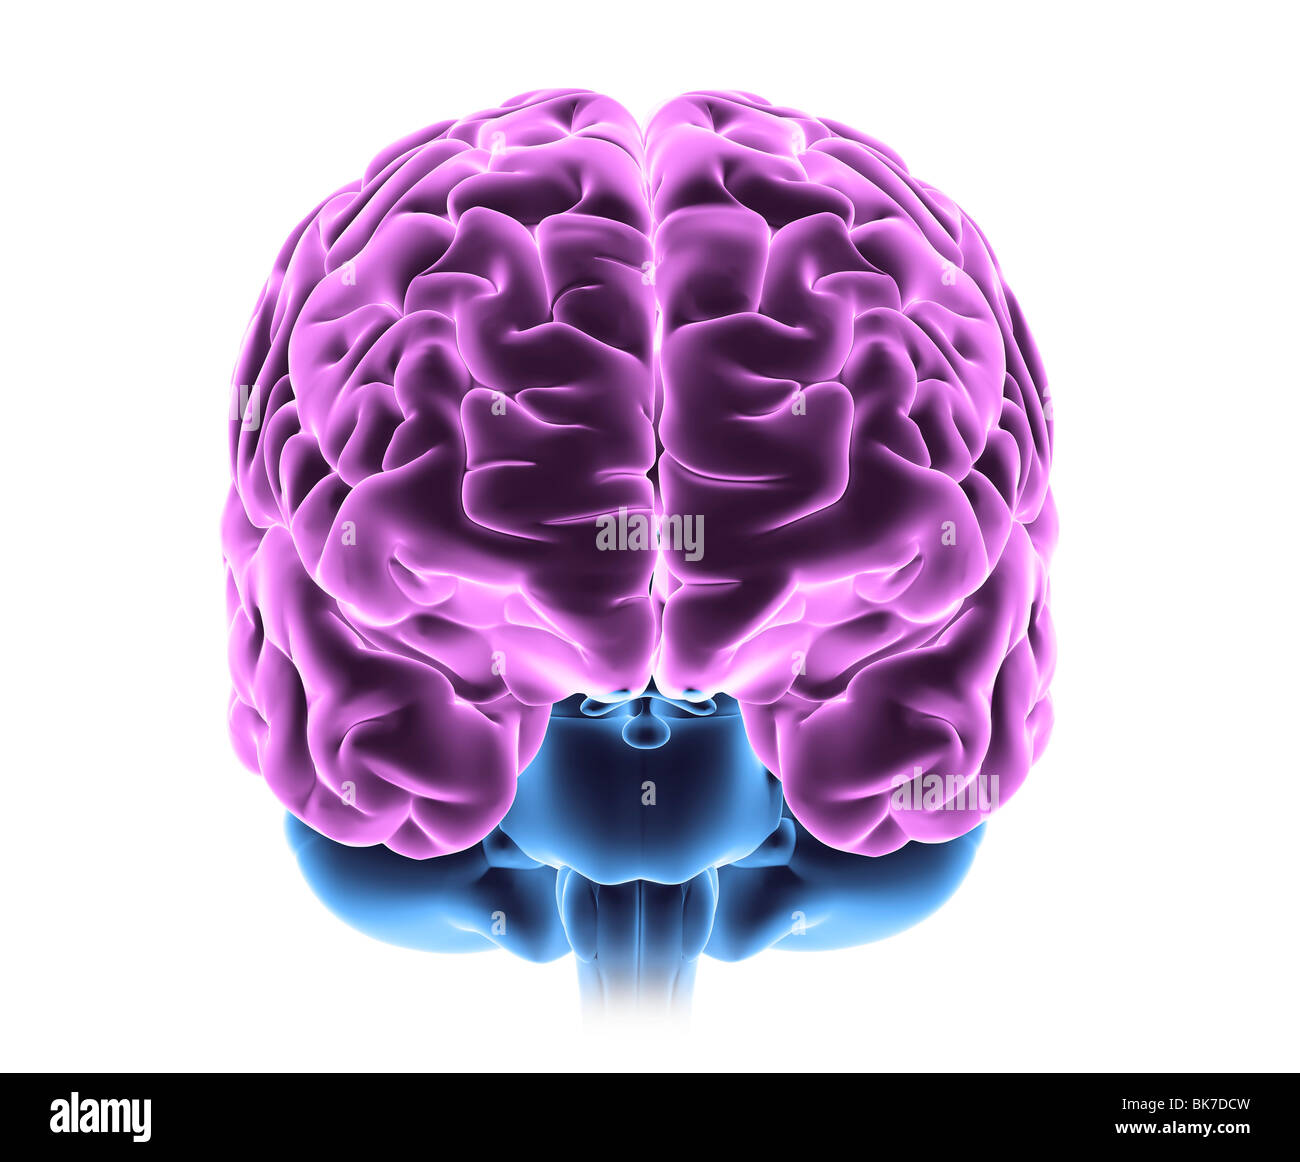 Human brain, computer artwork Stock Photo